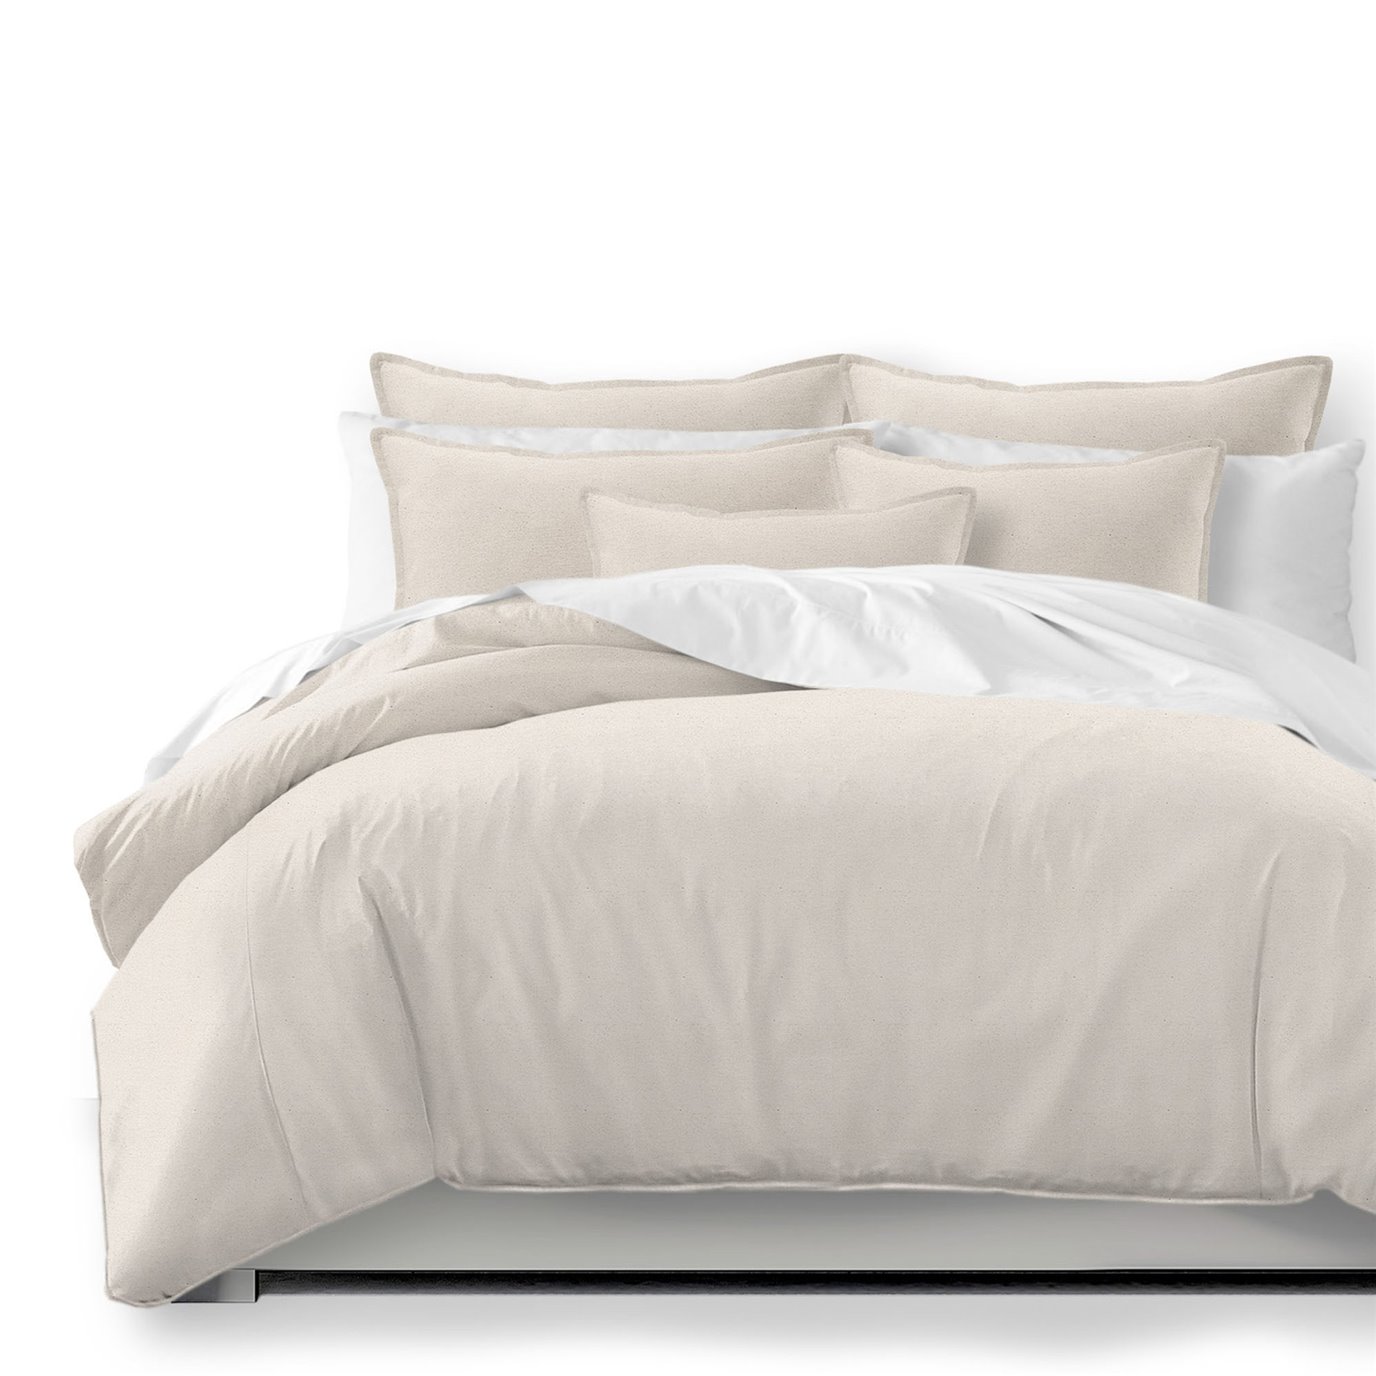 Braxton Natural Comforter and Pillow Sham(s) Set - Size Super King